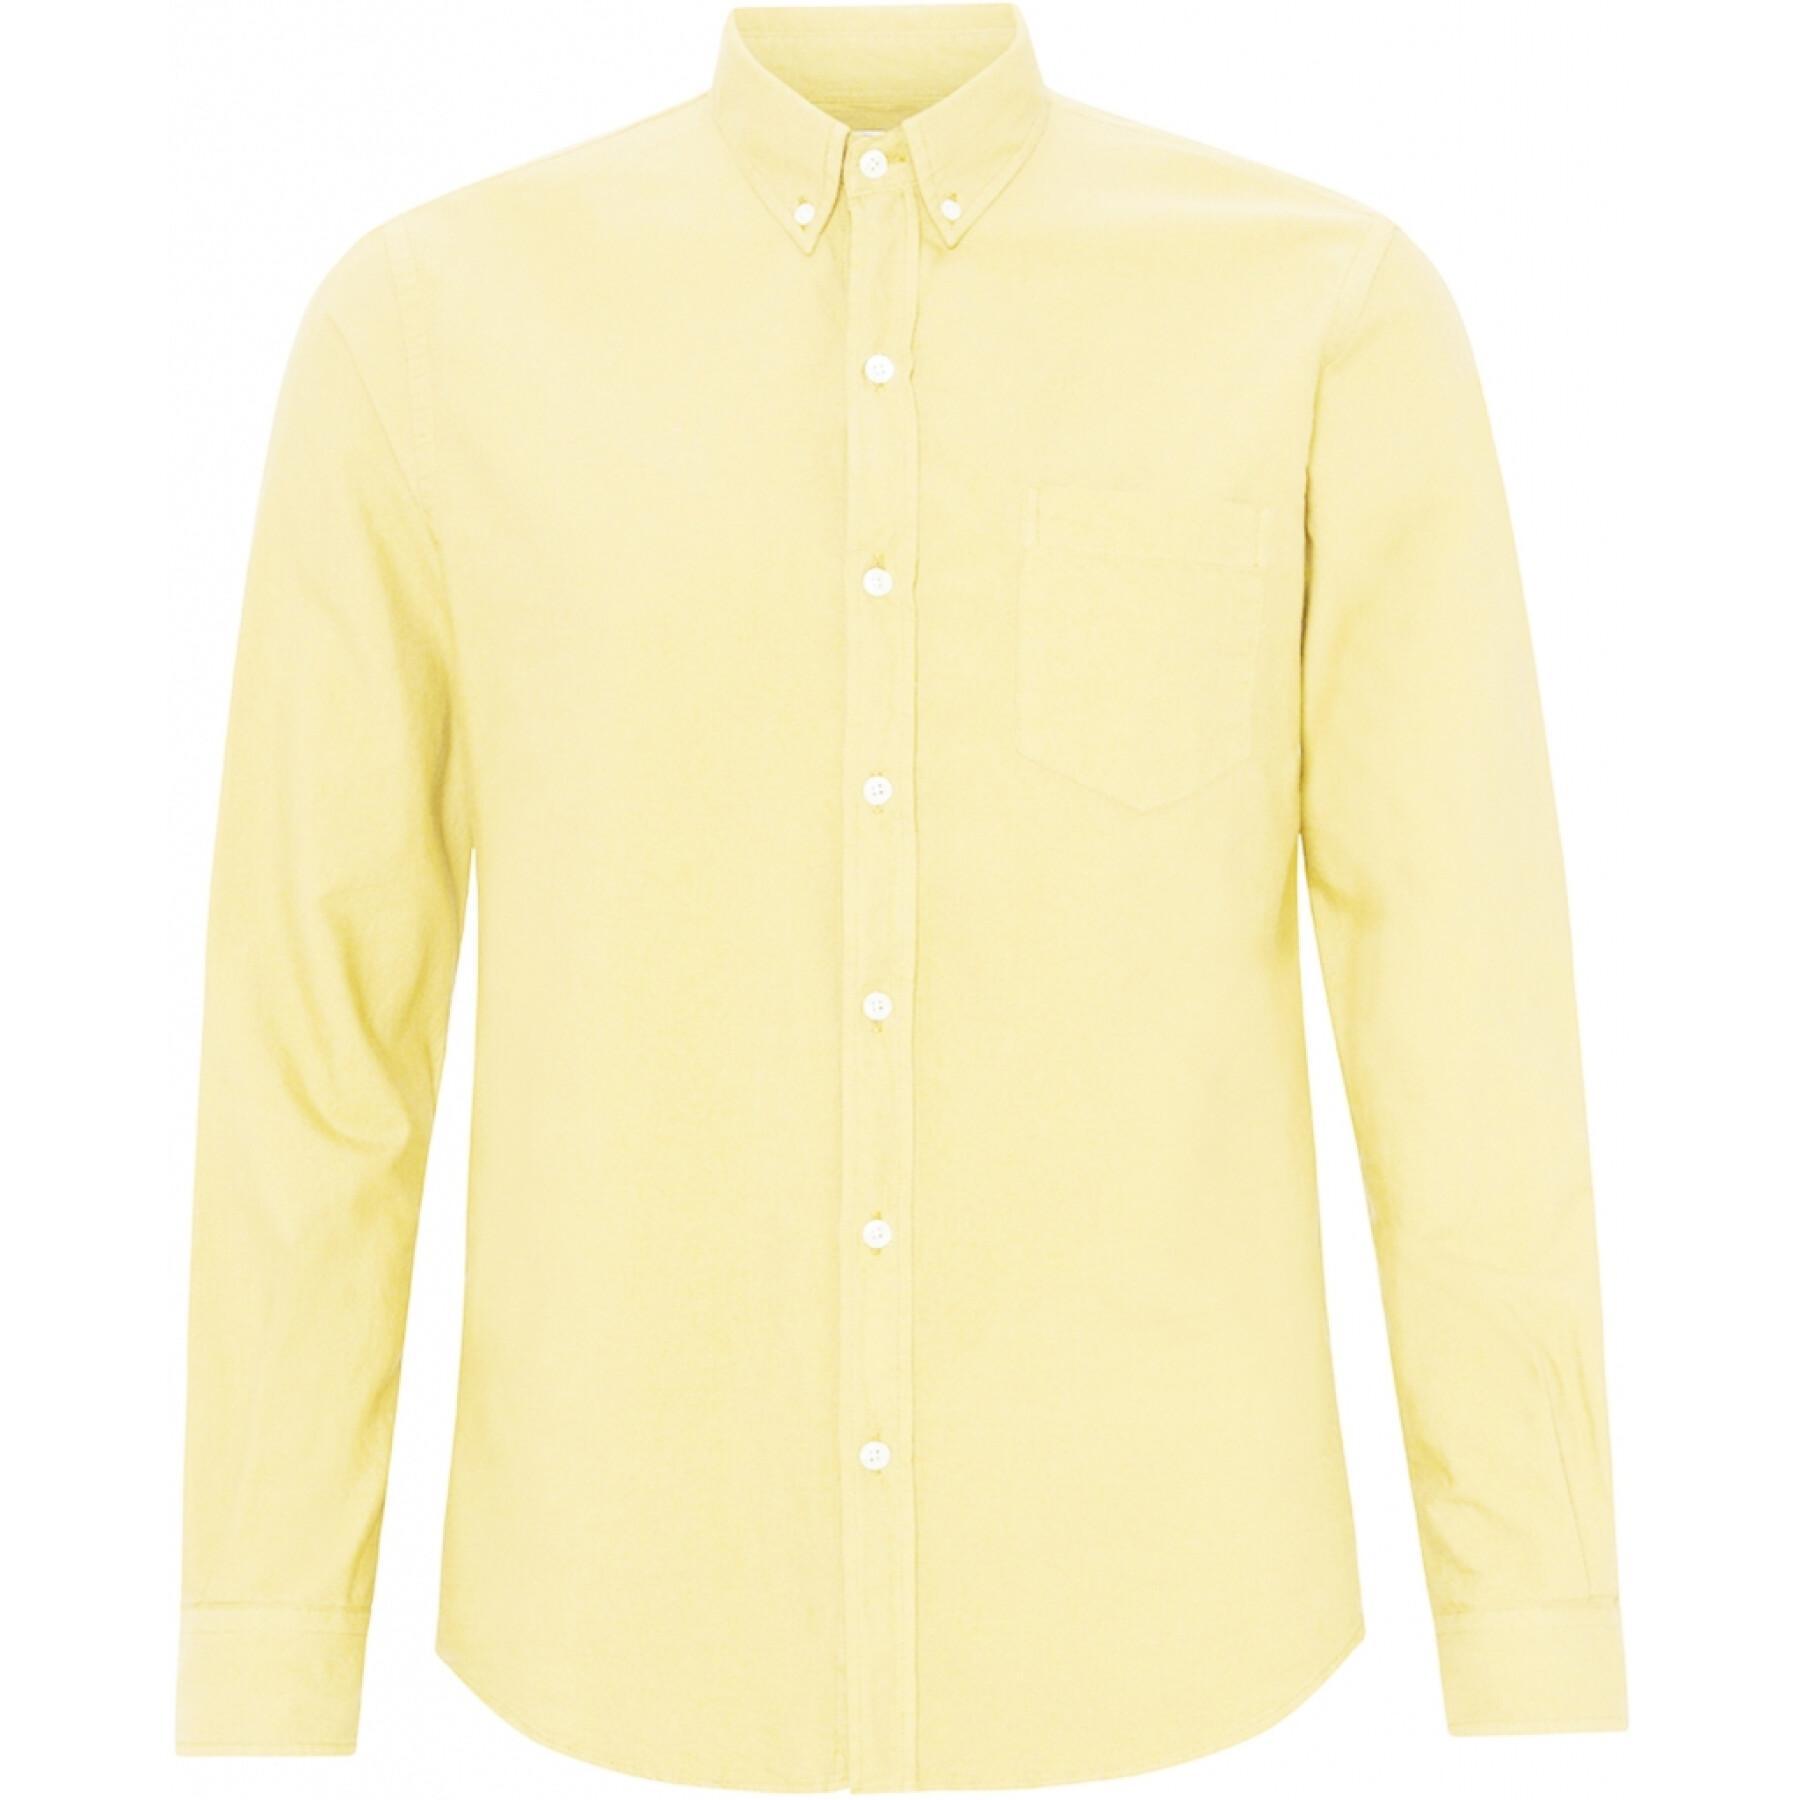 Shirt Colorful Standard Organic soft yellow